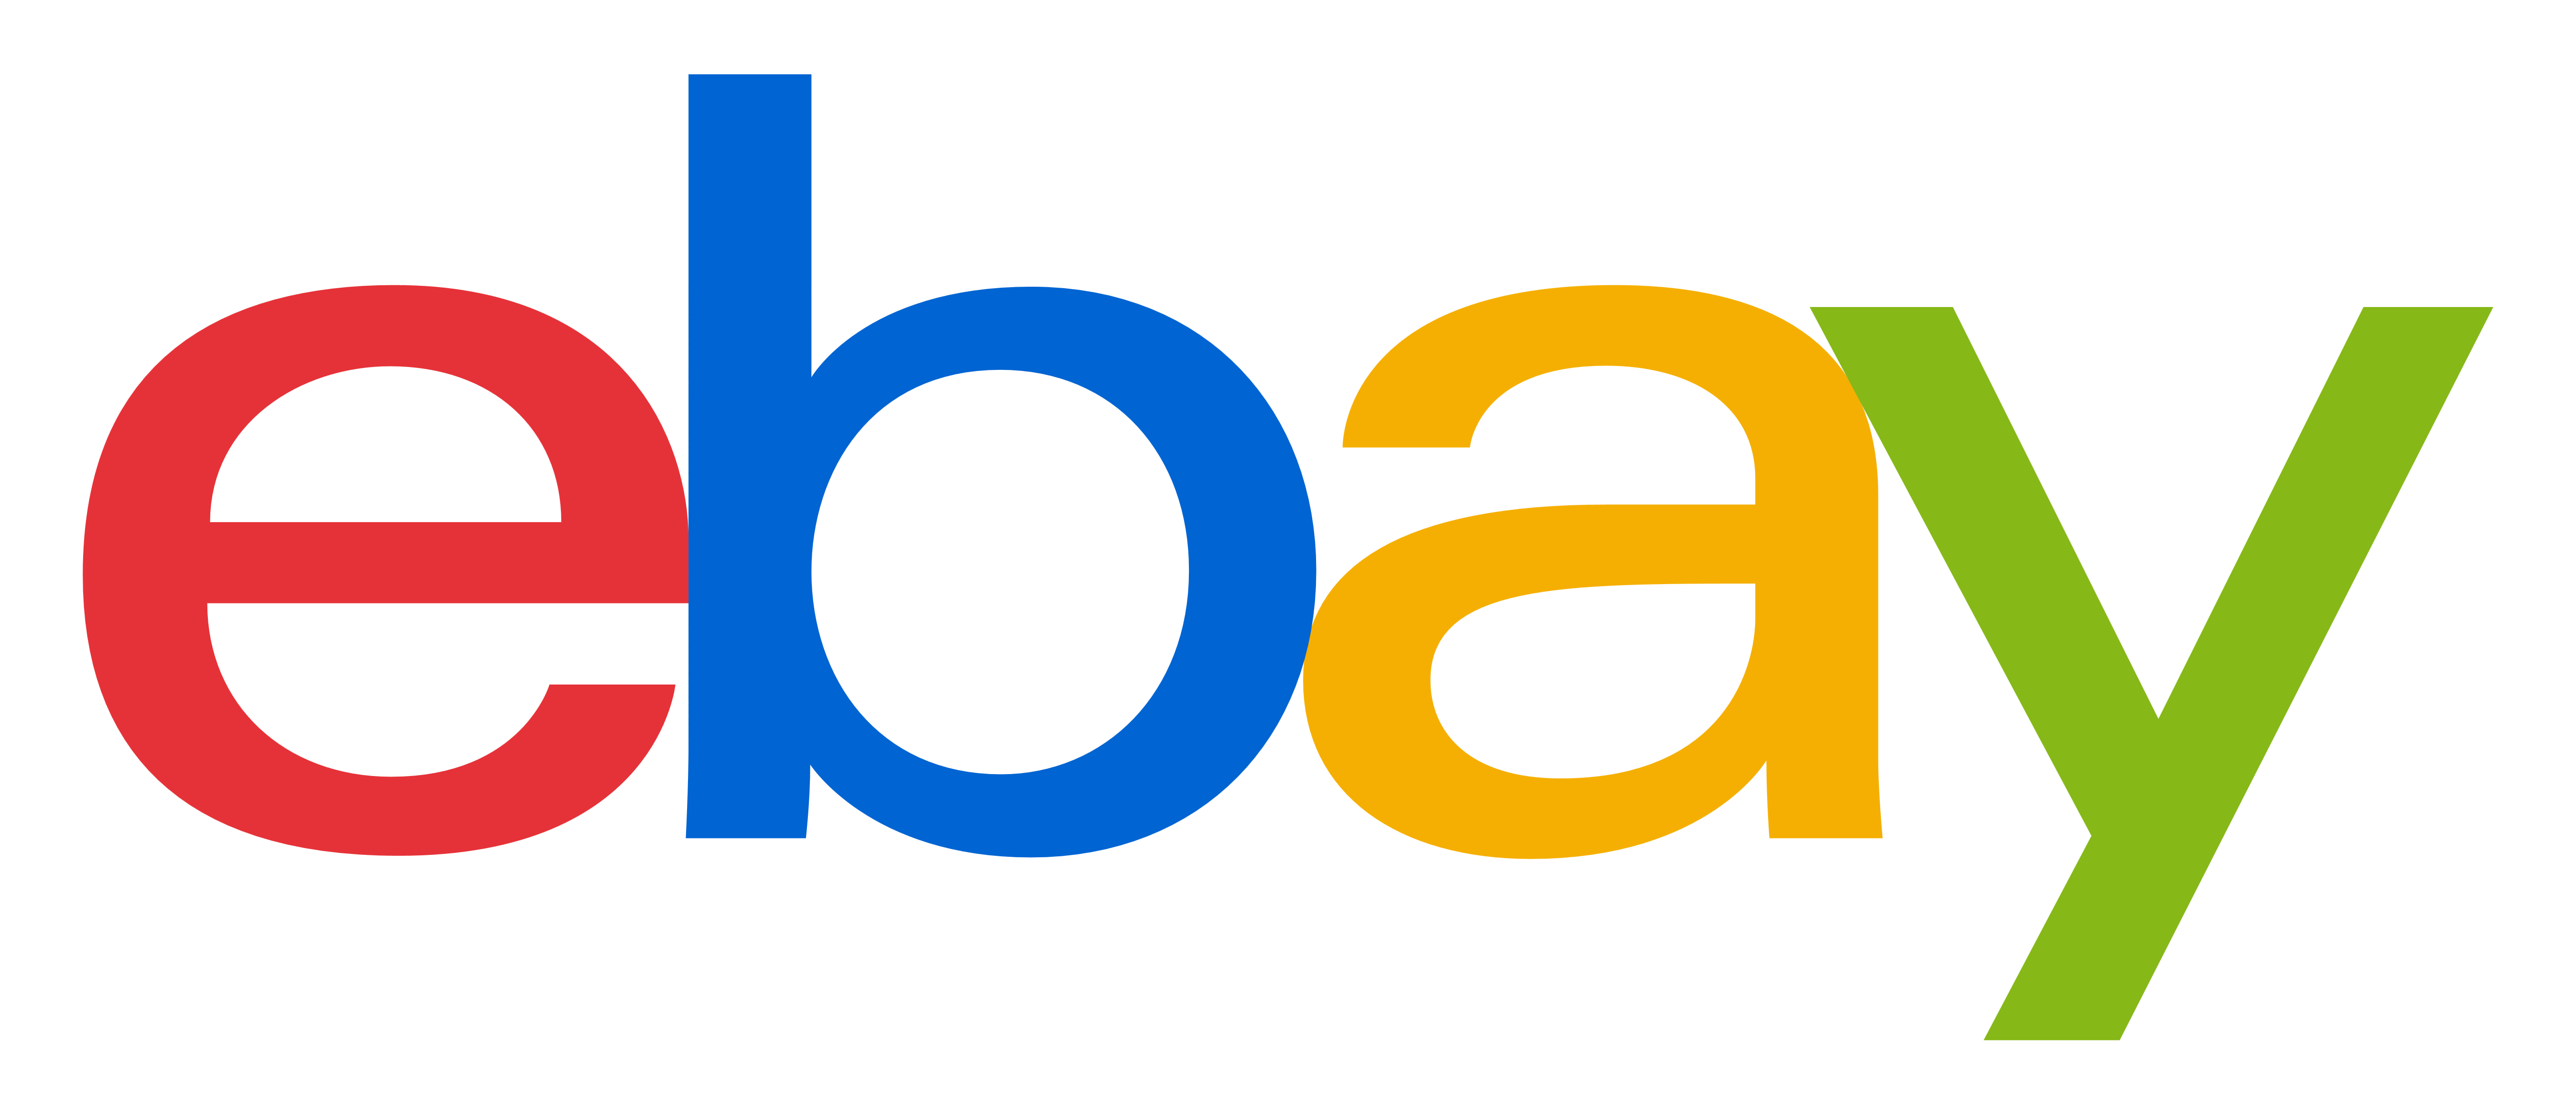 The eBay Developers Program M